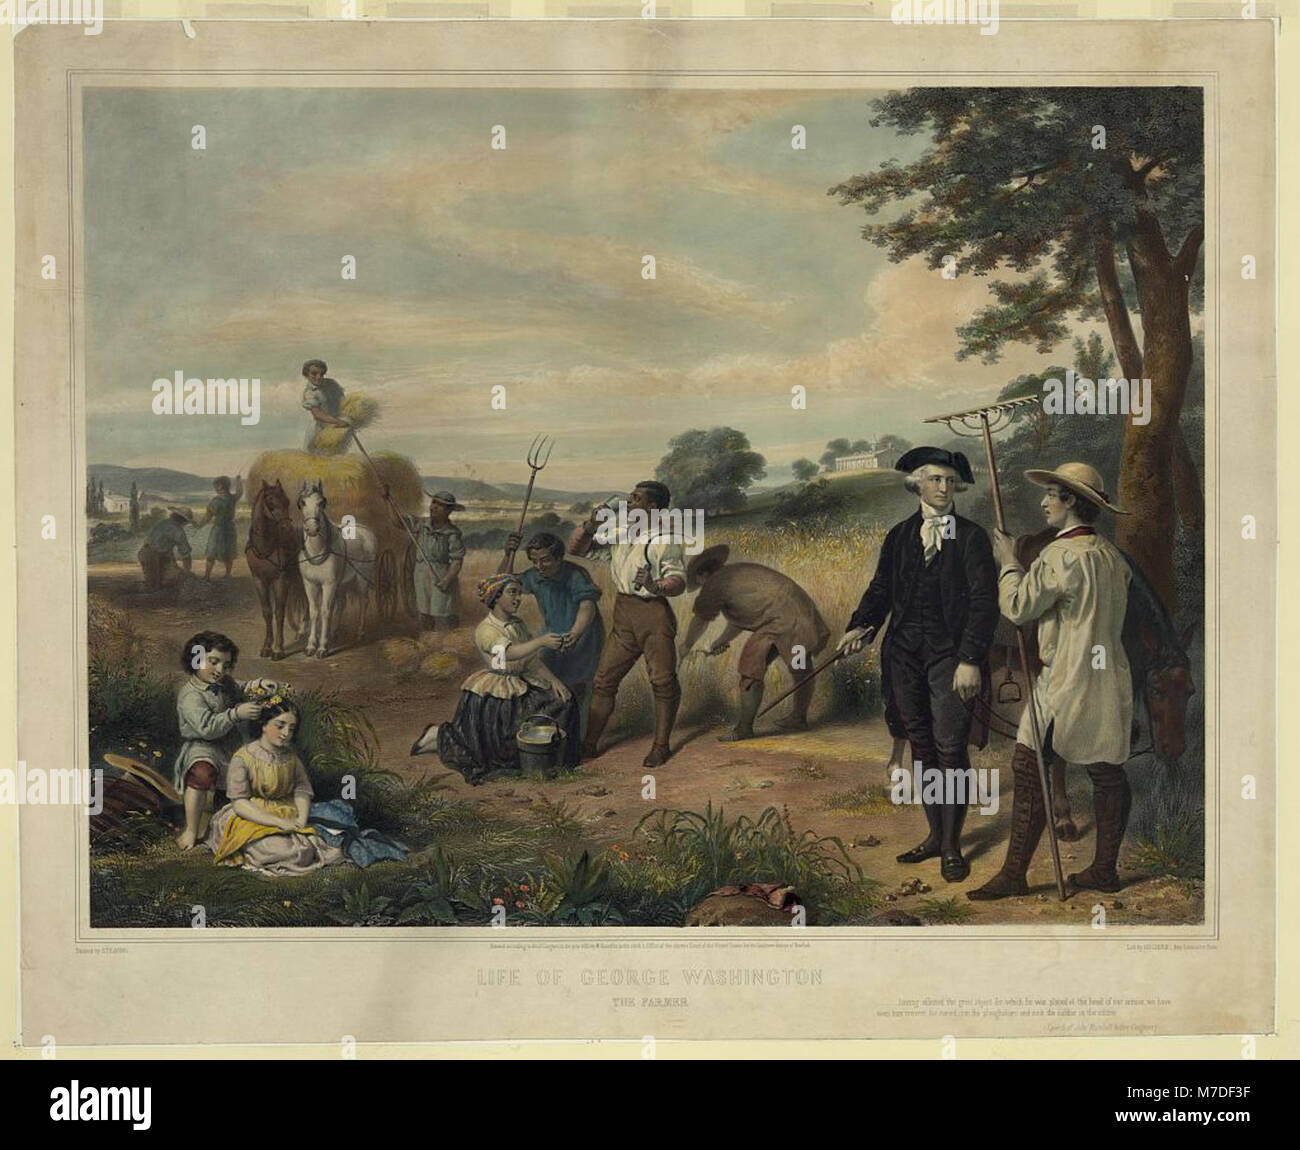 Life of George Washington-The farmer - painted by Stearns ; lith. by Régnier, imp. Lemercier, Paris. LCCN96521631 Stock Photo